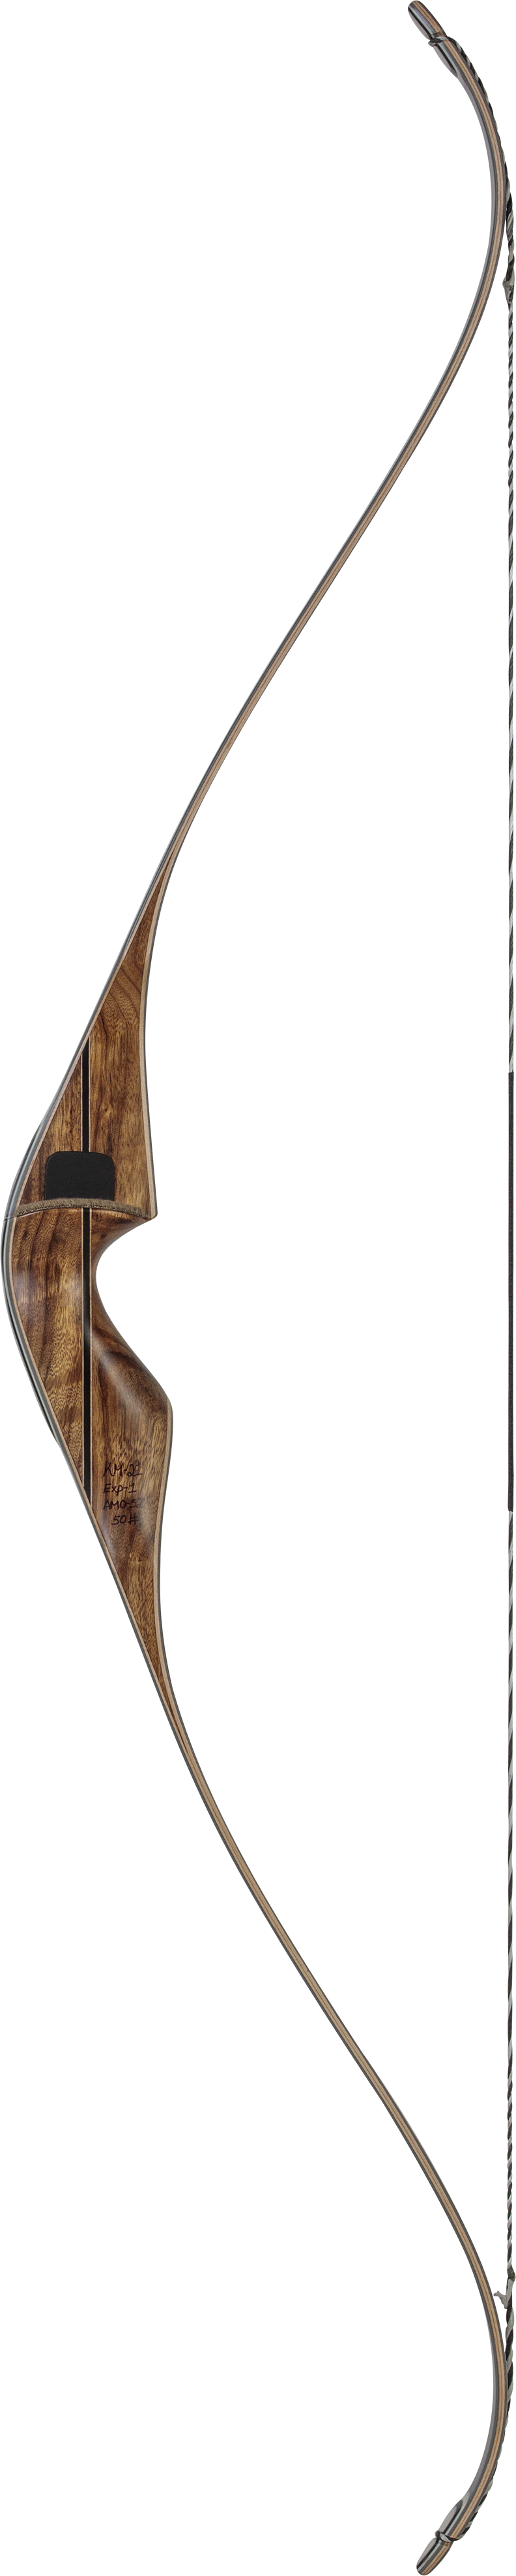 Bear Archery Kodiak Magnum Recurve Bow - Traditional Hunting Bow